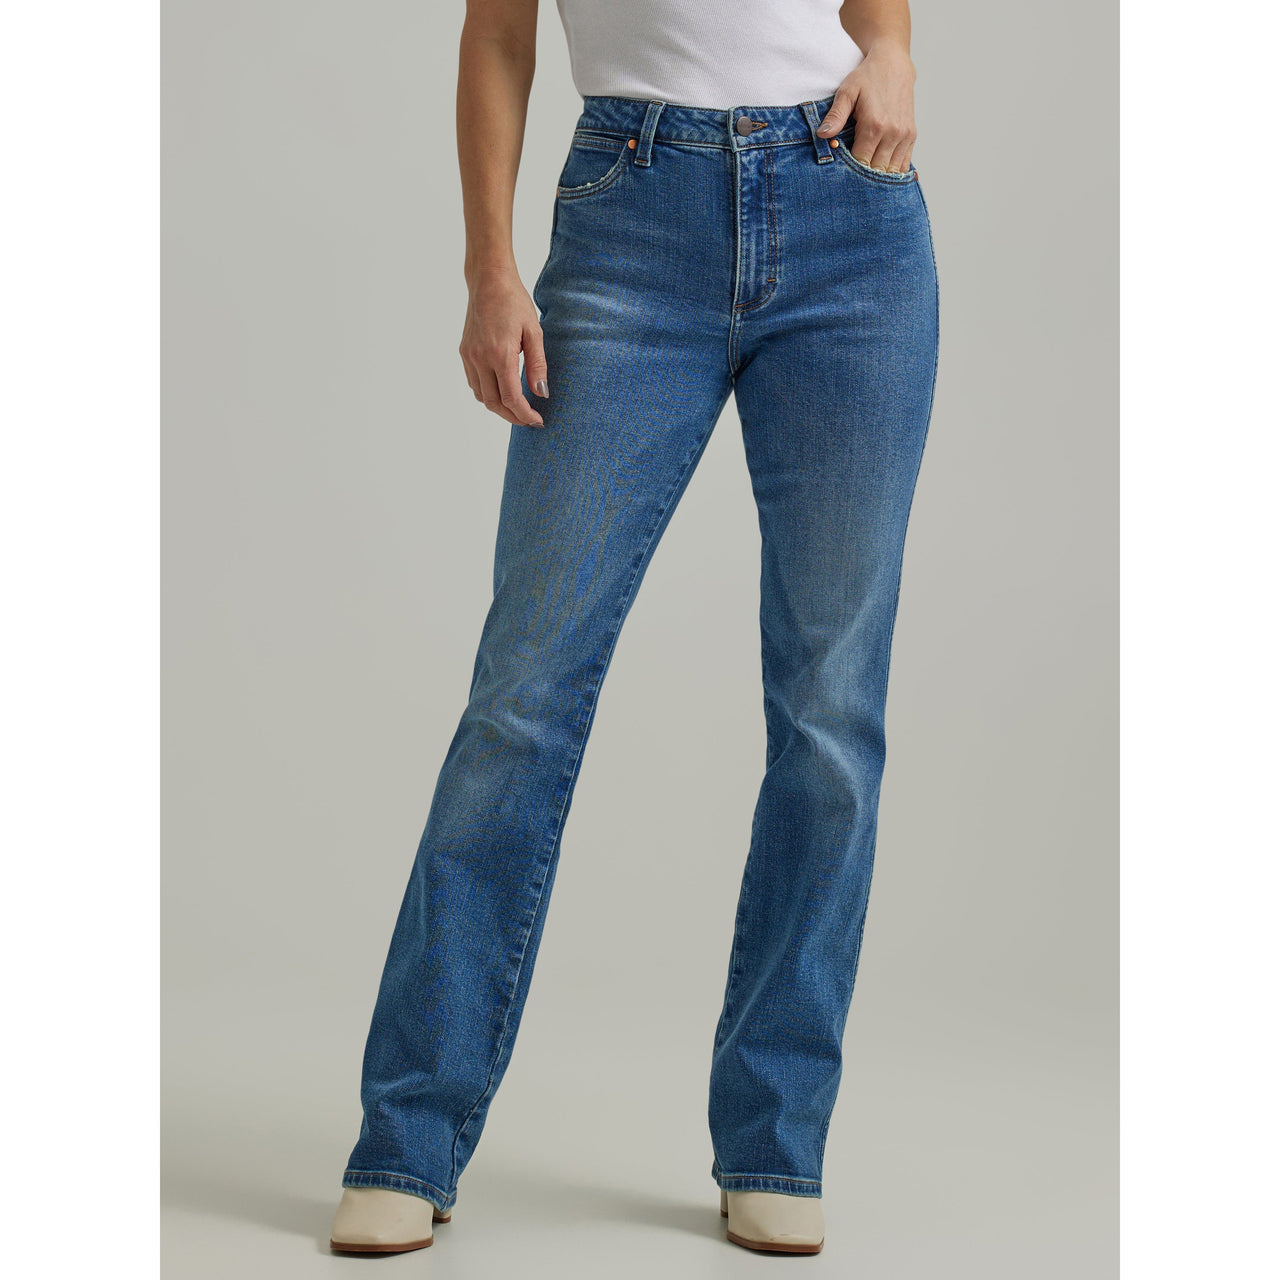 Wrangler Women's Retro Bailey High Rise Bootcut Jeans - Ember